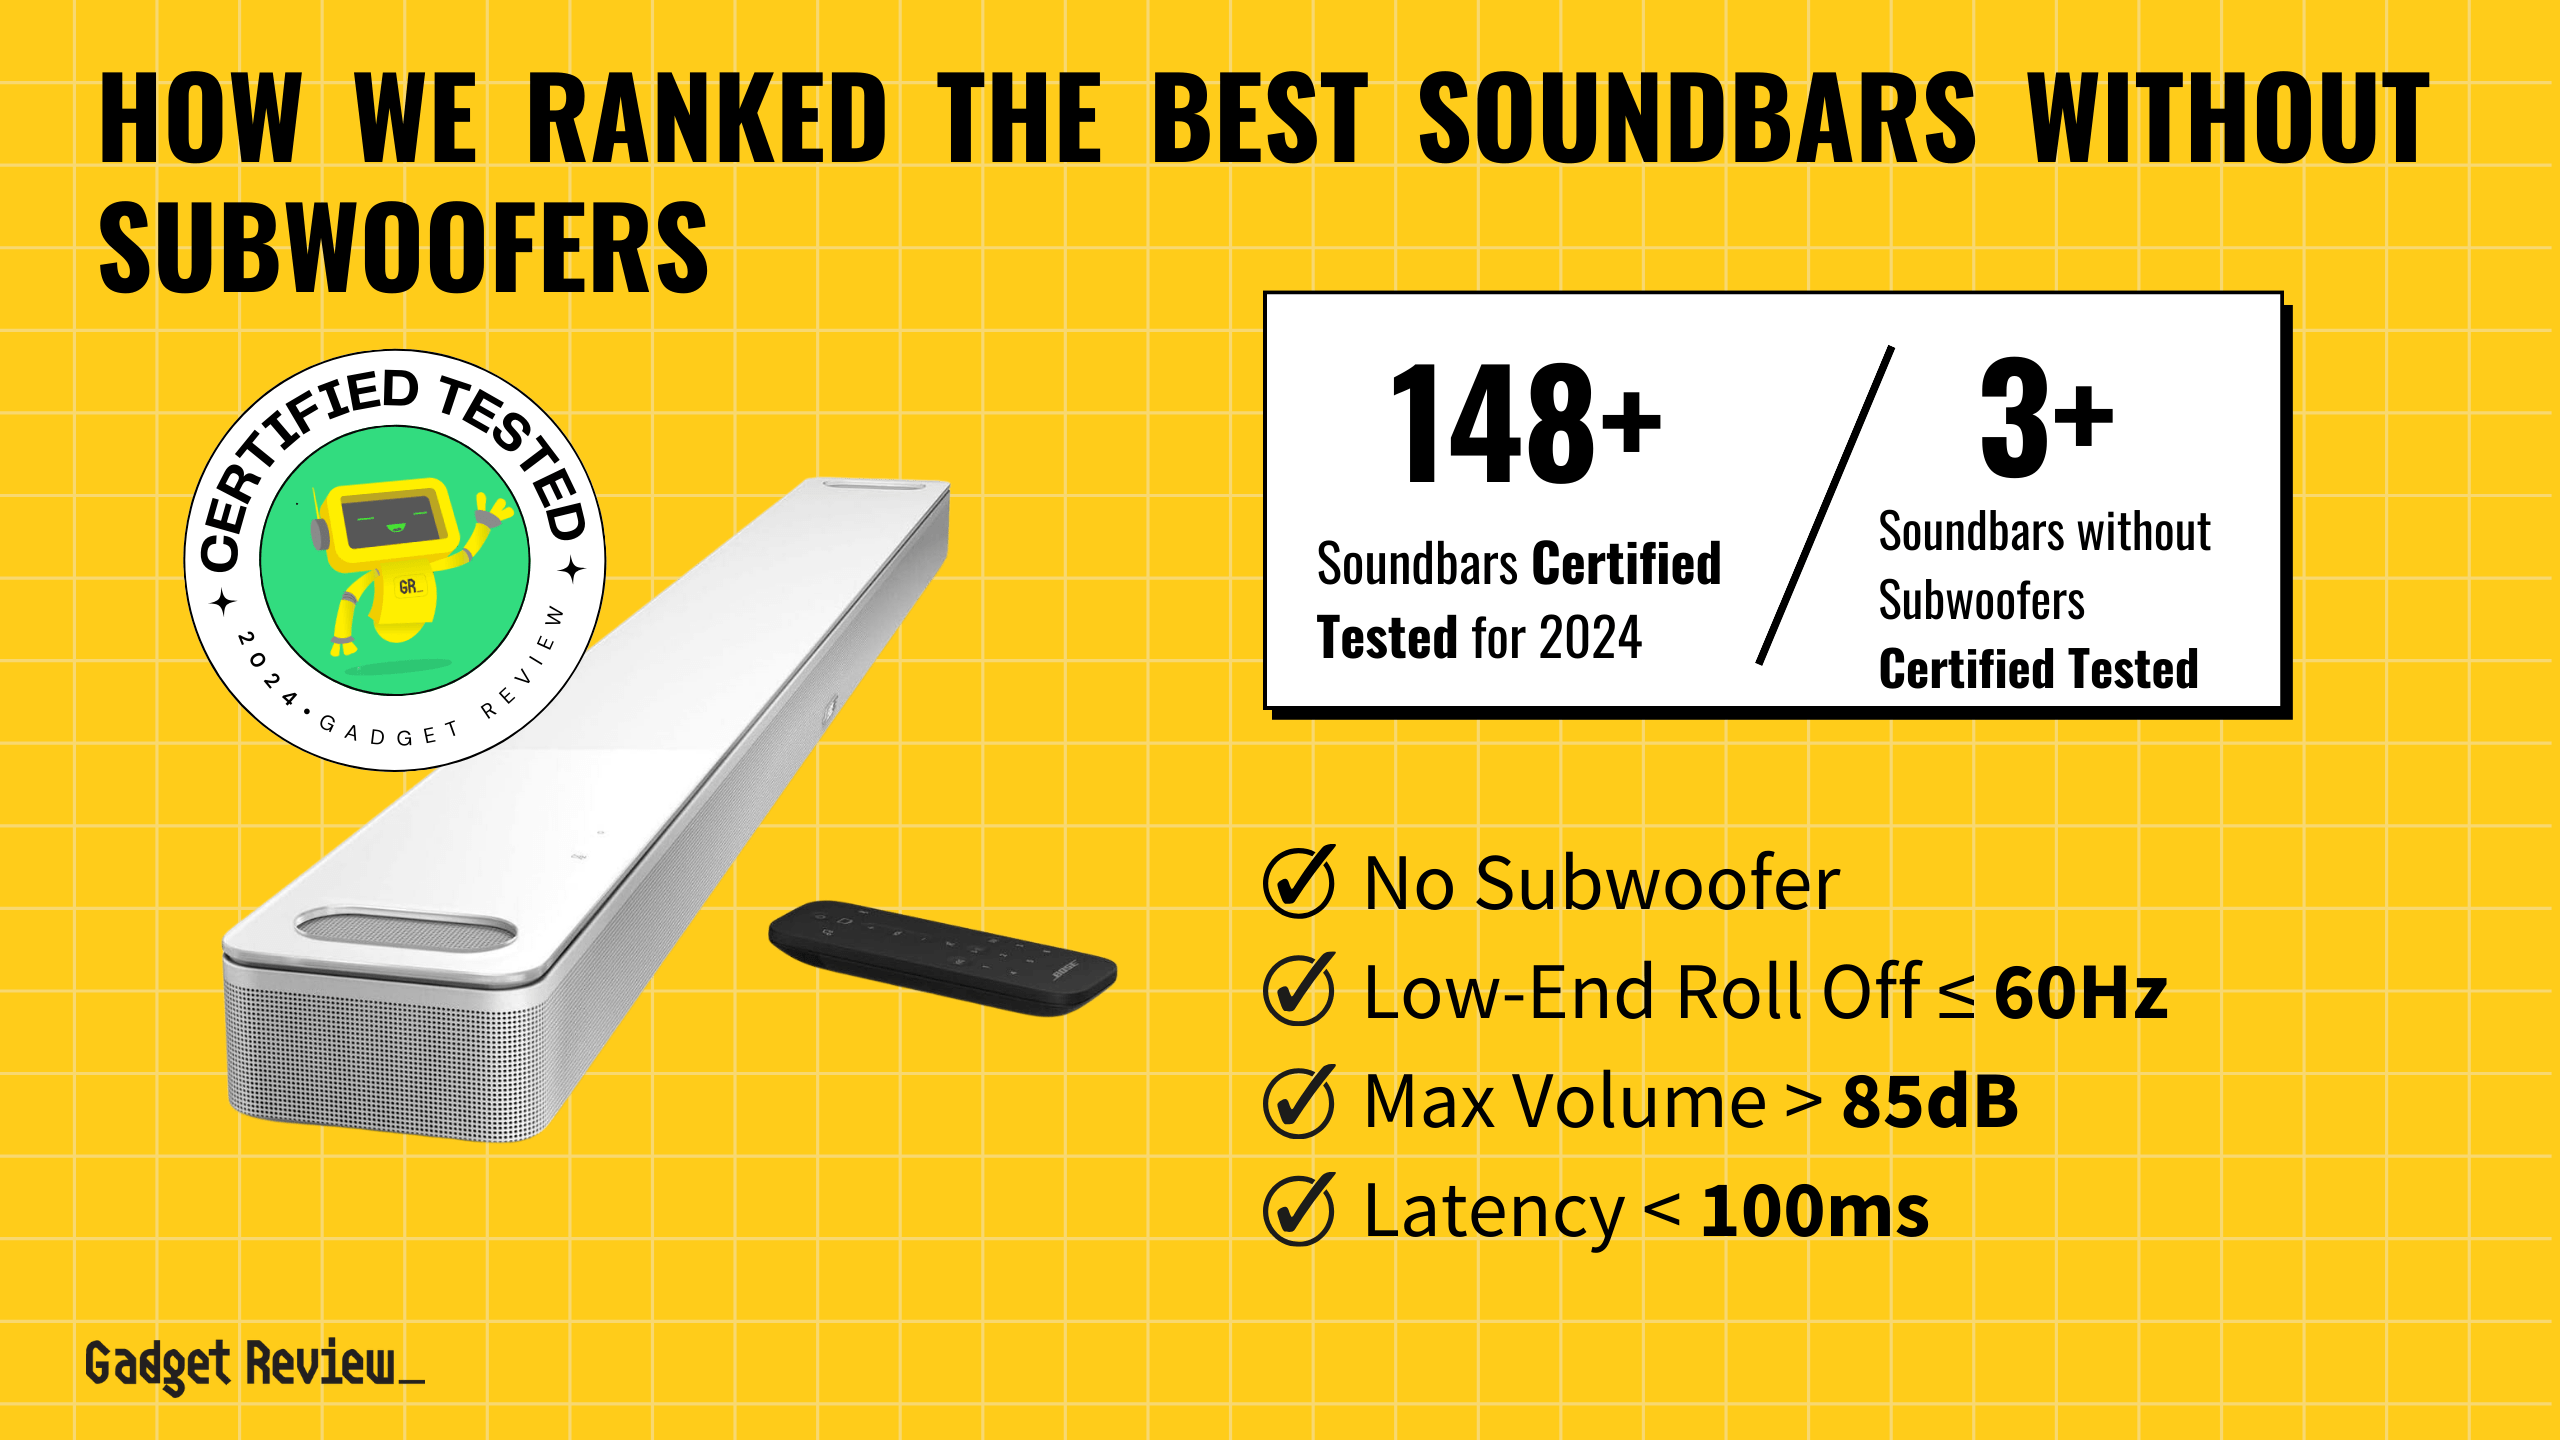 best soundbar without subwoofer guide that shows the top best soundbar model